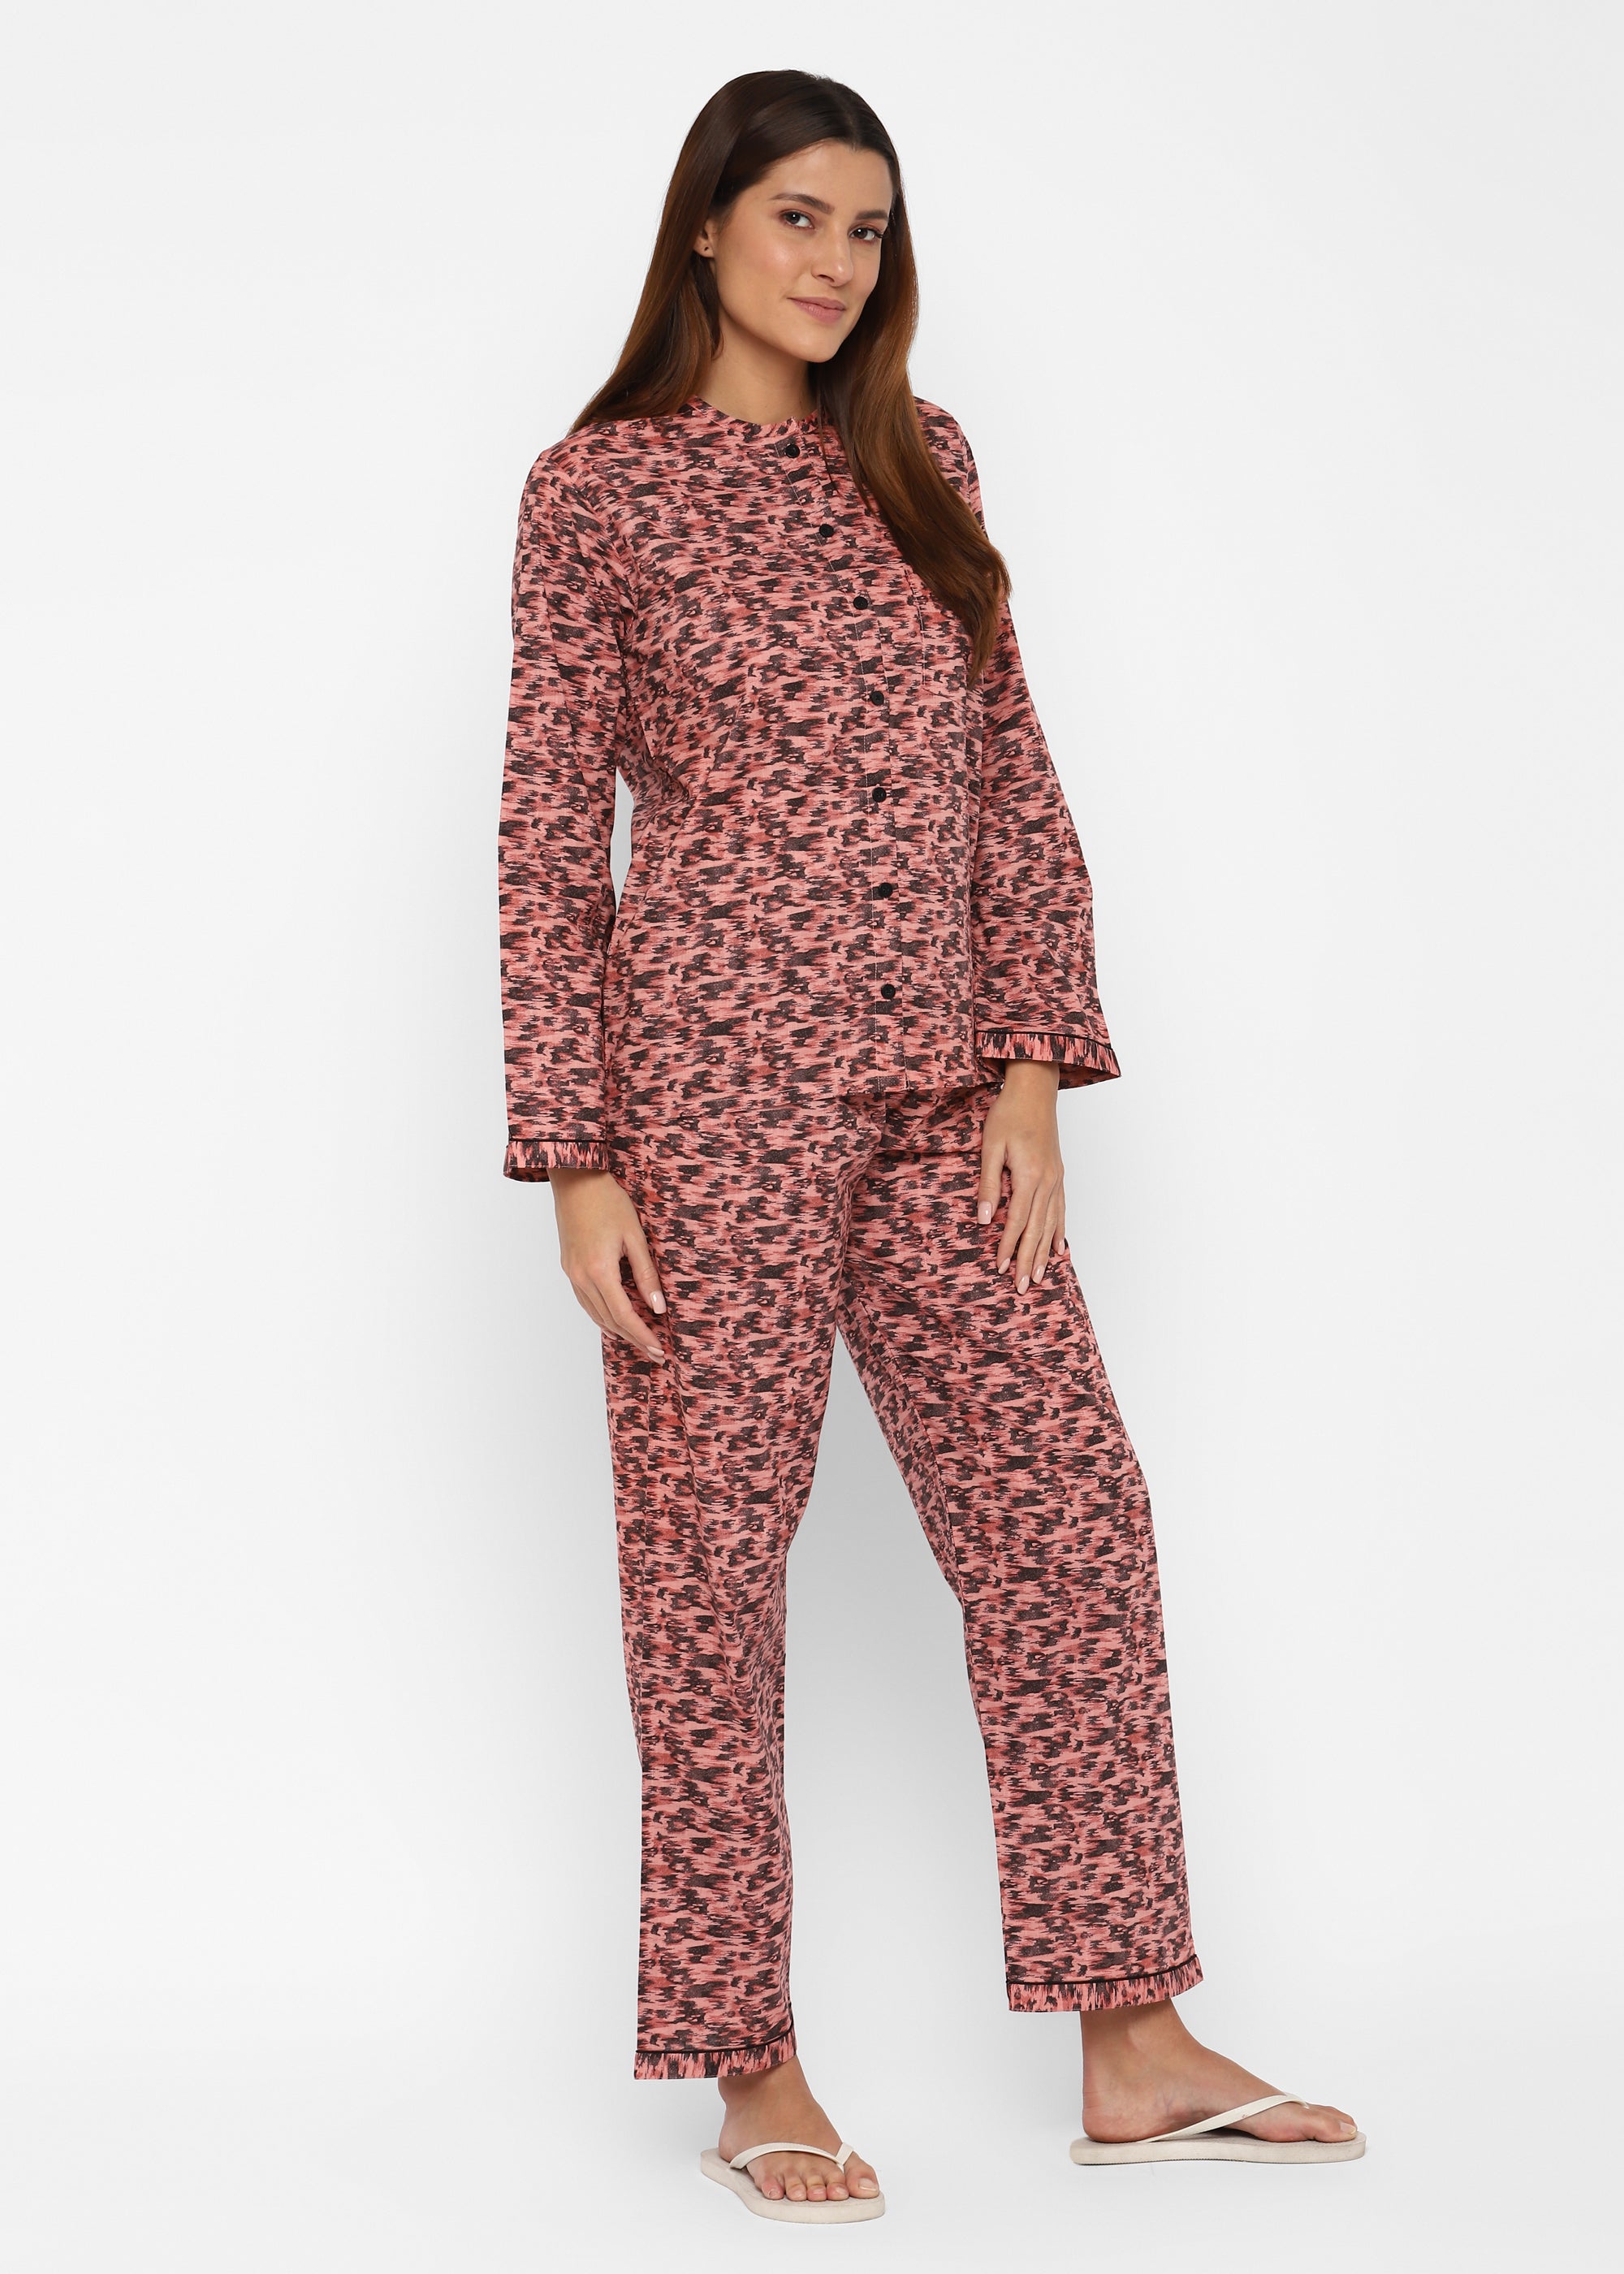 Pink Ikat Print Long Sleeve Women's Night Suit - Shopbloom